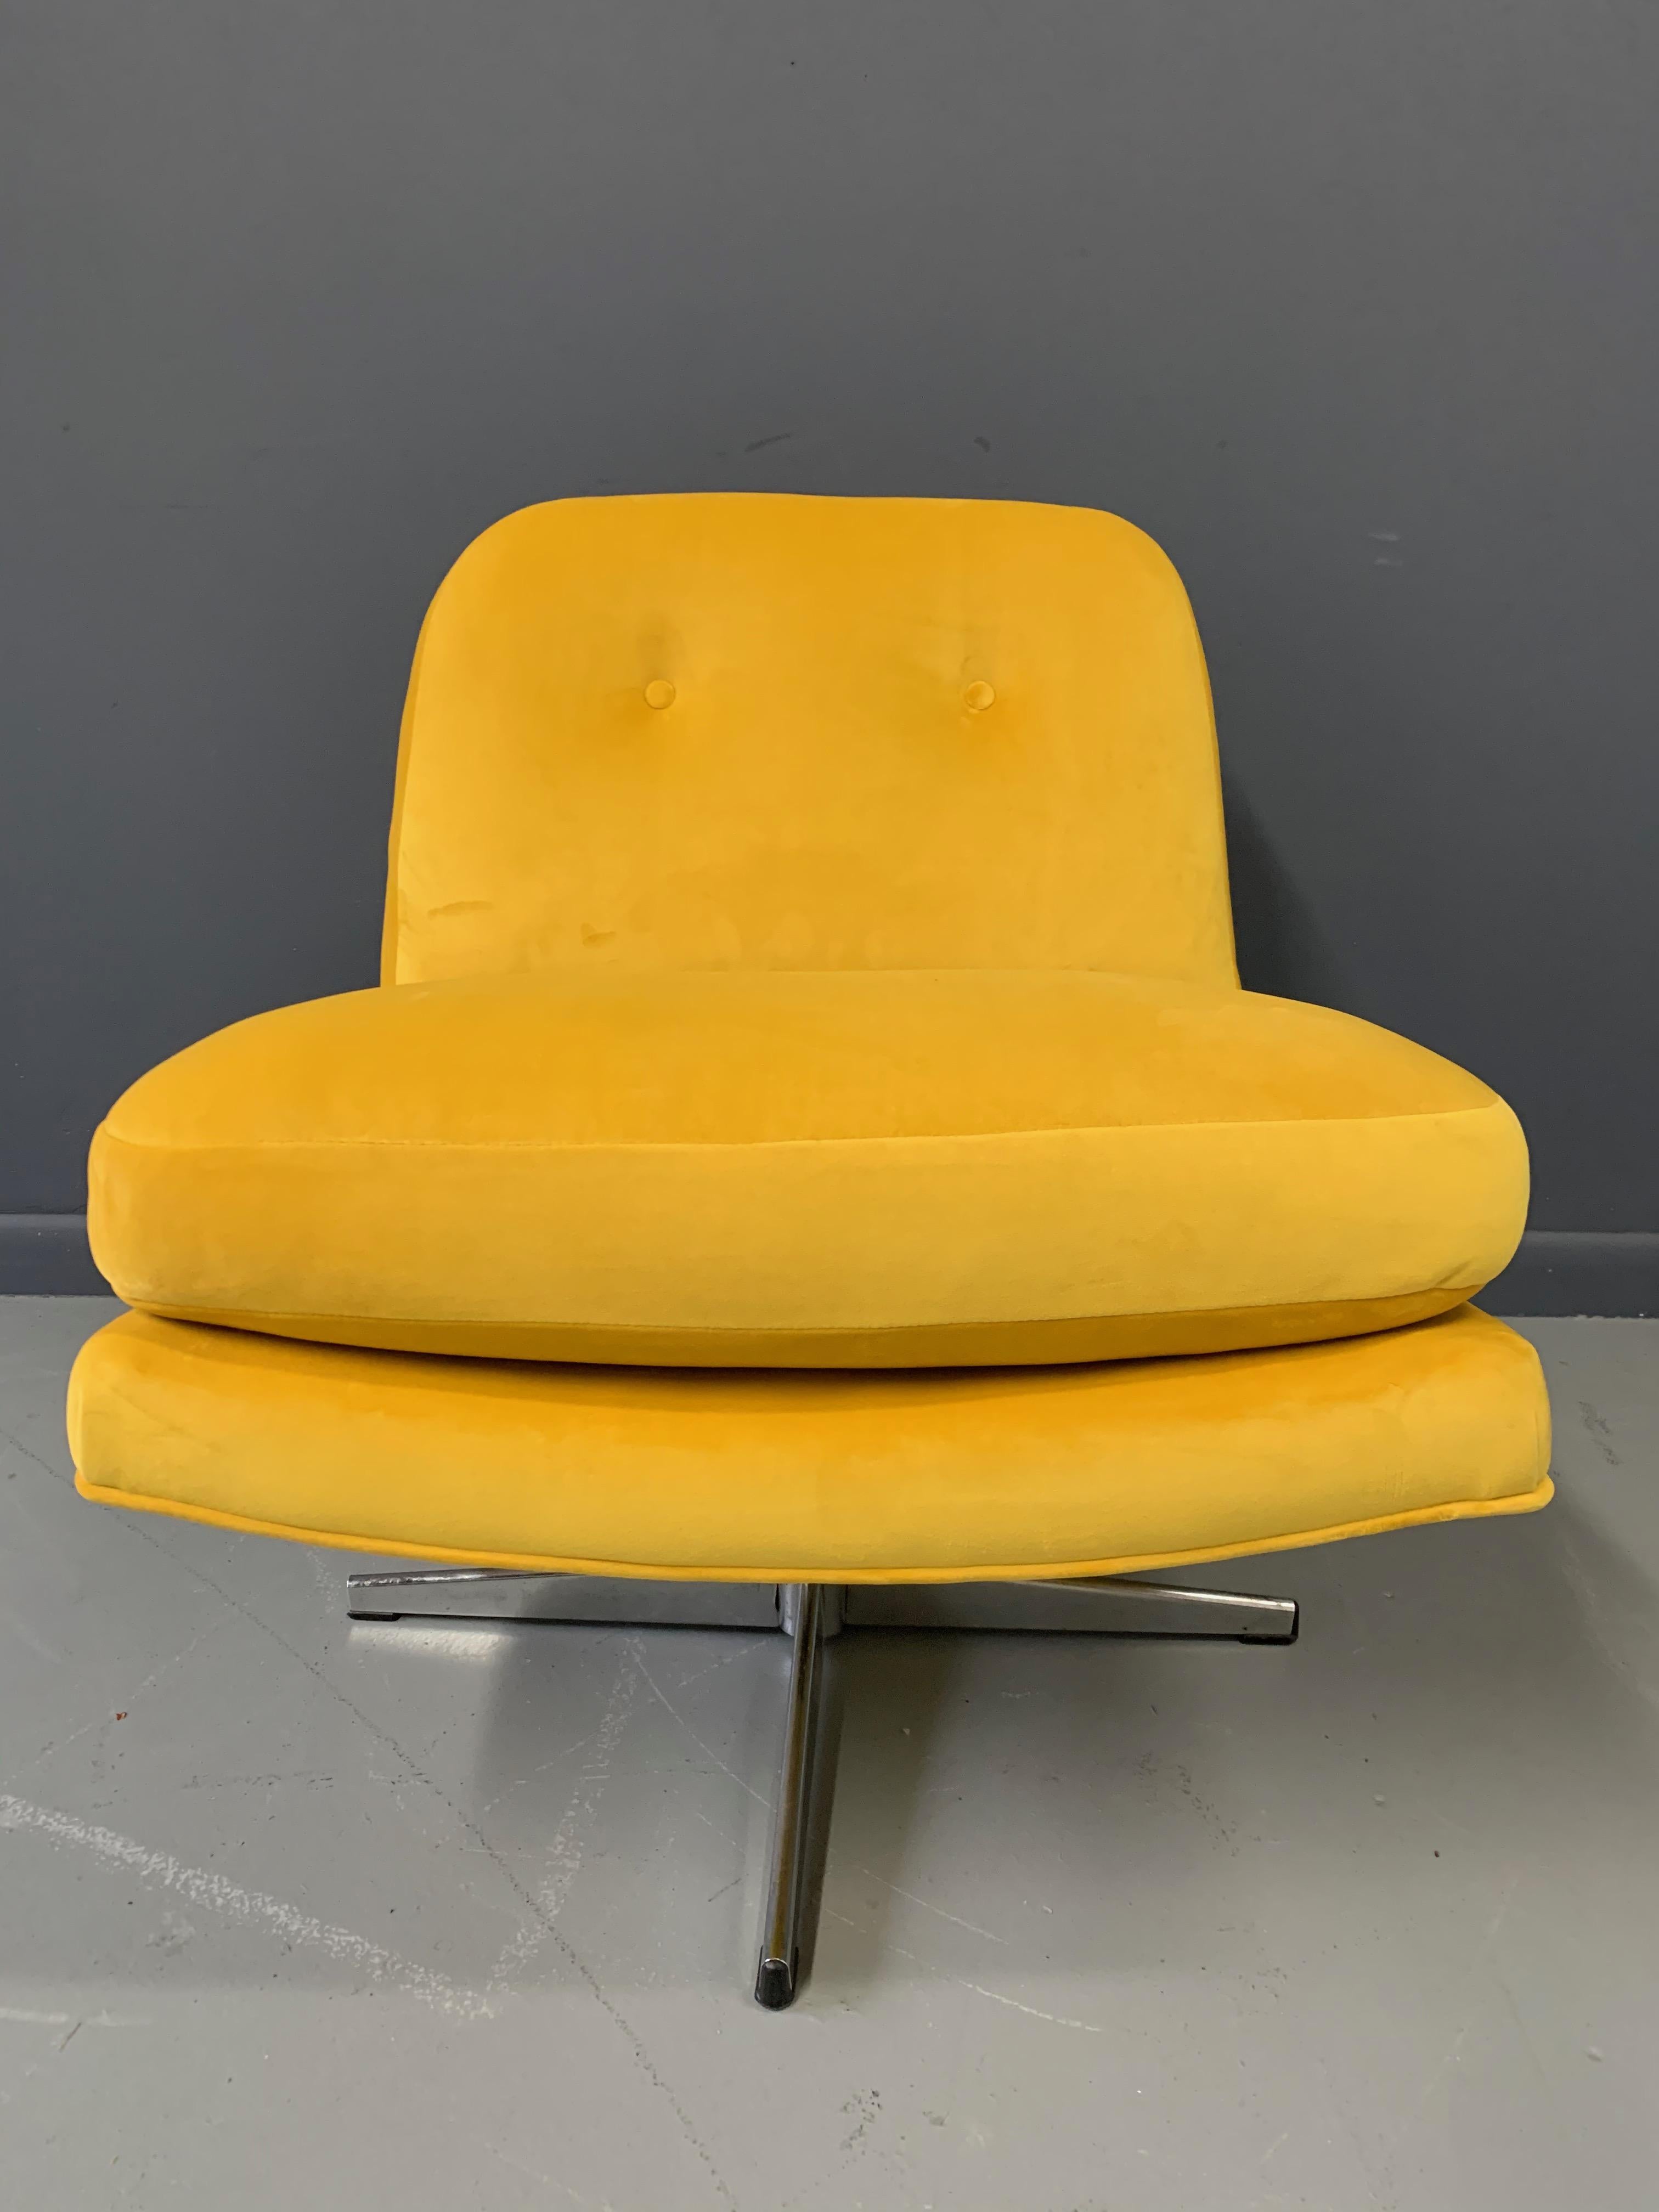 North American Midcentury Swivel Chair in Marigold Velvet For Sale